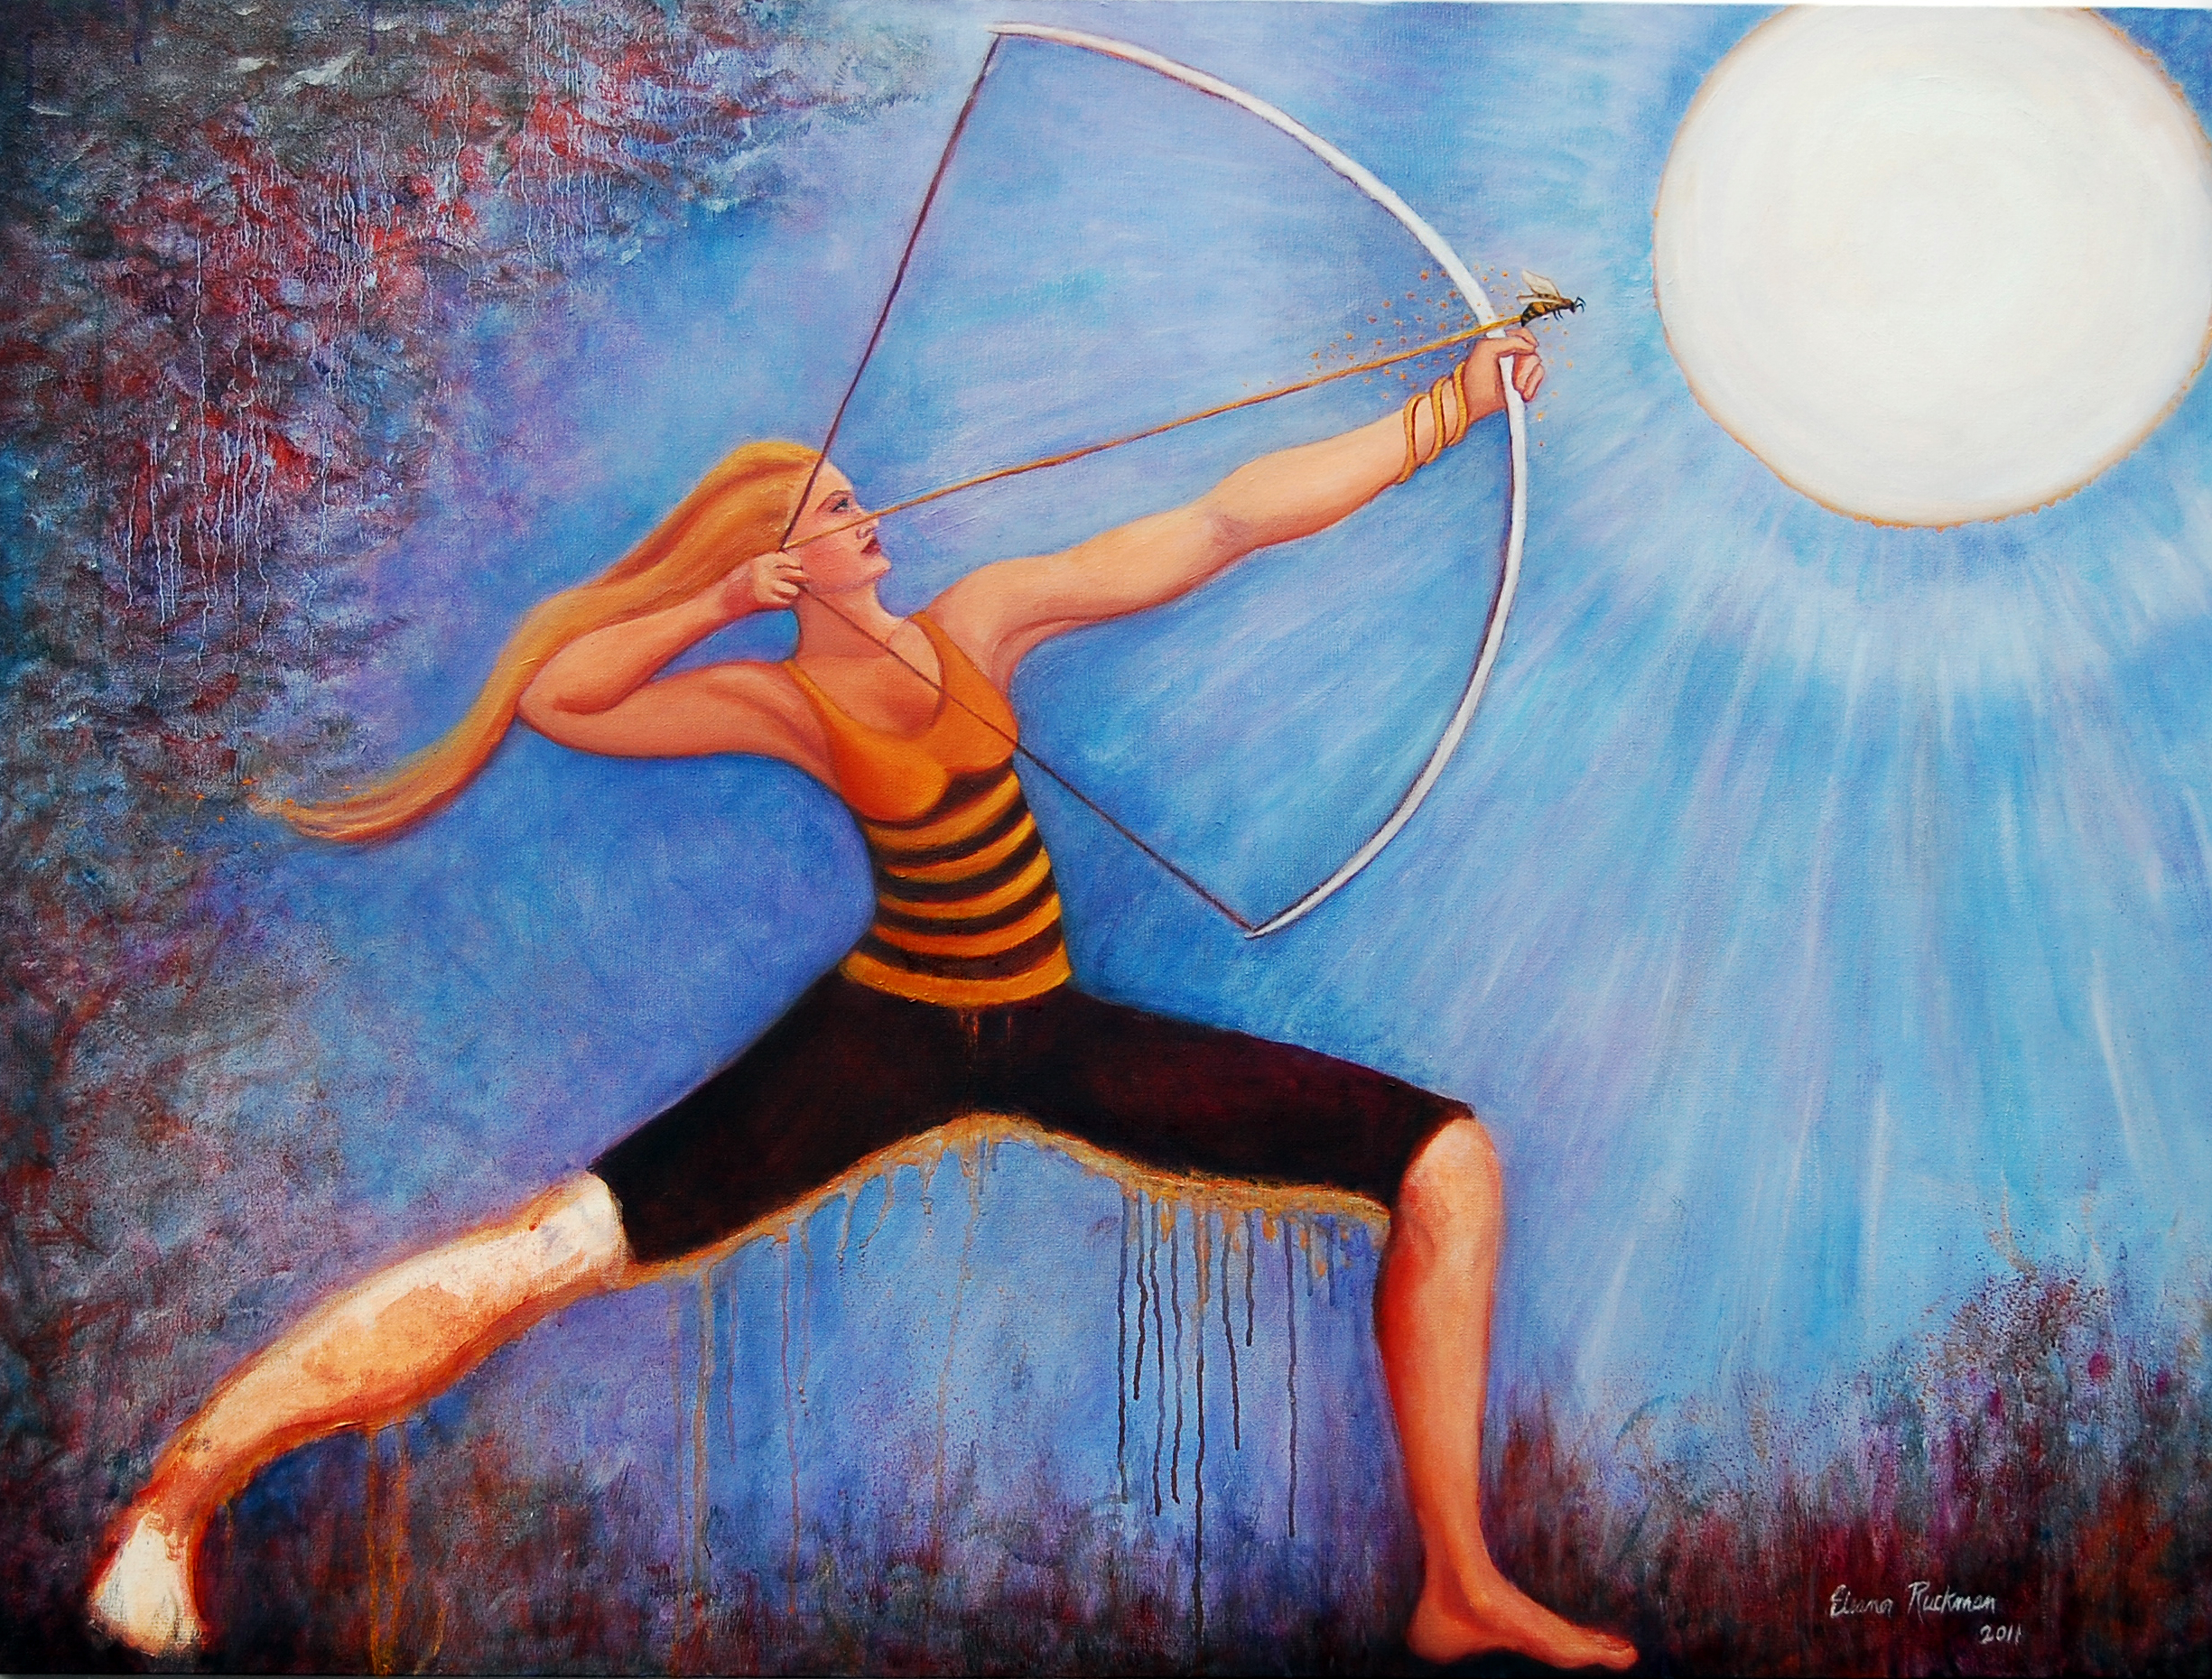 Taking Aim, 2011, Oil on canvas, 30"h x 40"w, Eleanor Ruckman